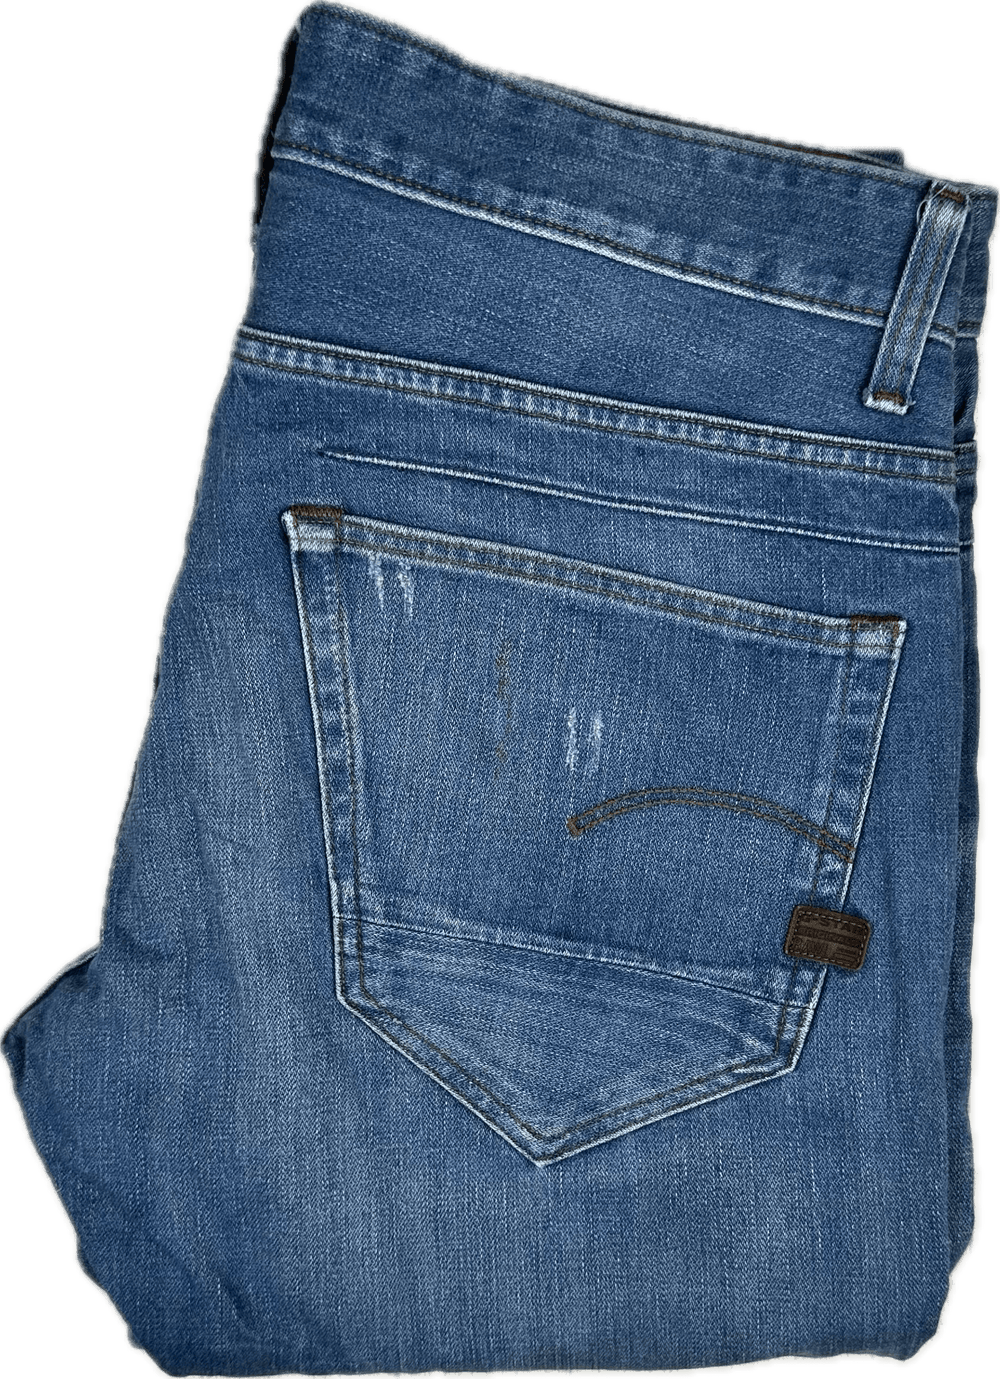 G Star Raw D-STAQ 5 Pocket Straight Tapered Jeans -Size 32/36 - Jean Pool